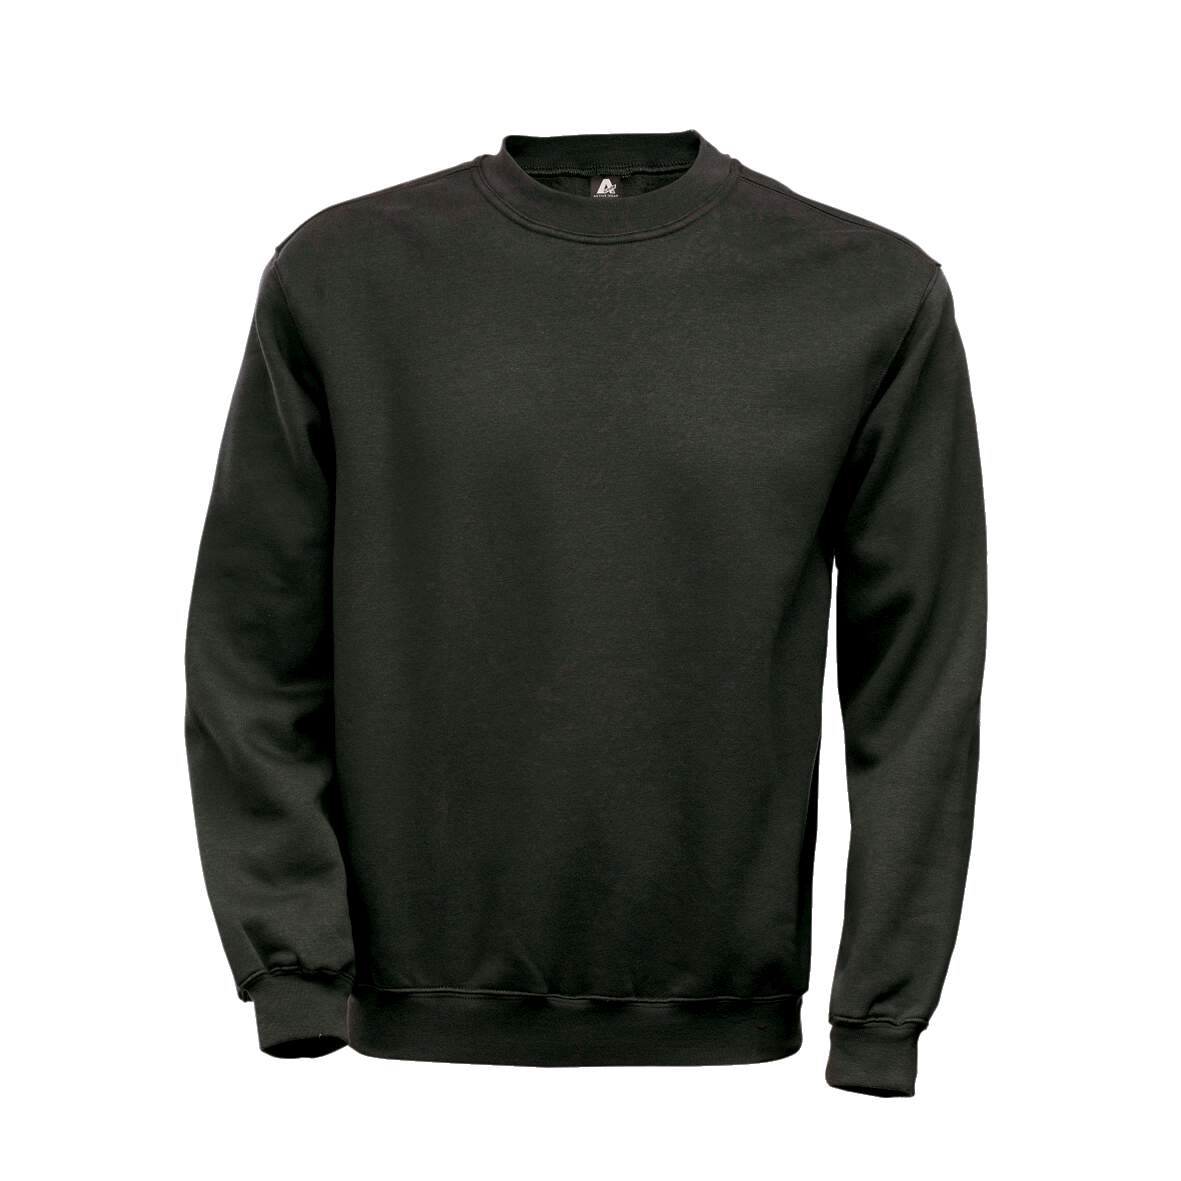 1181288 - Sweatshirt schwarz 100225